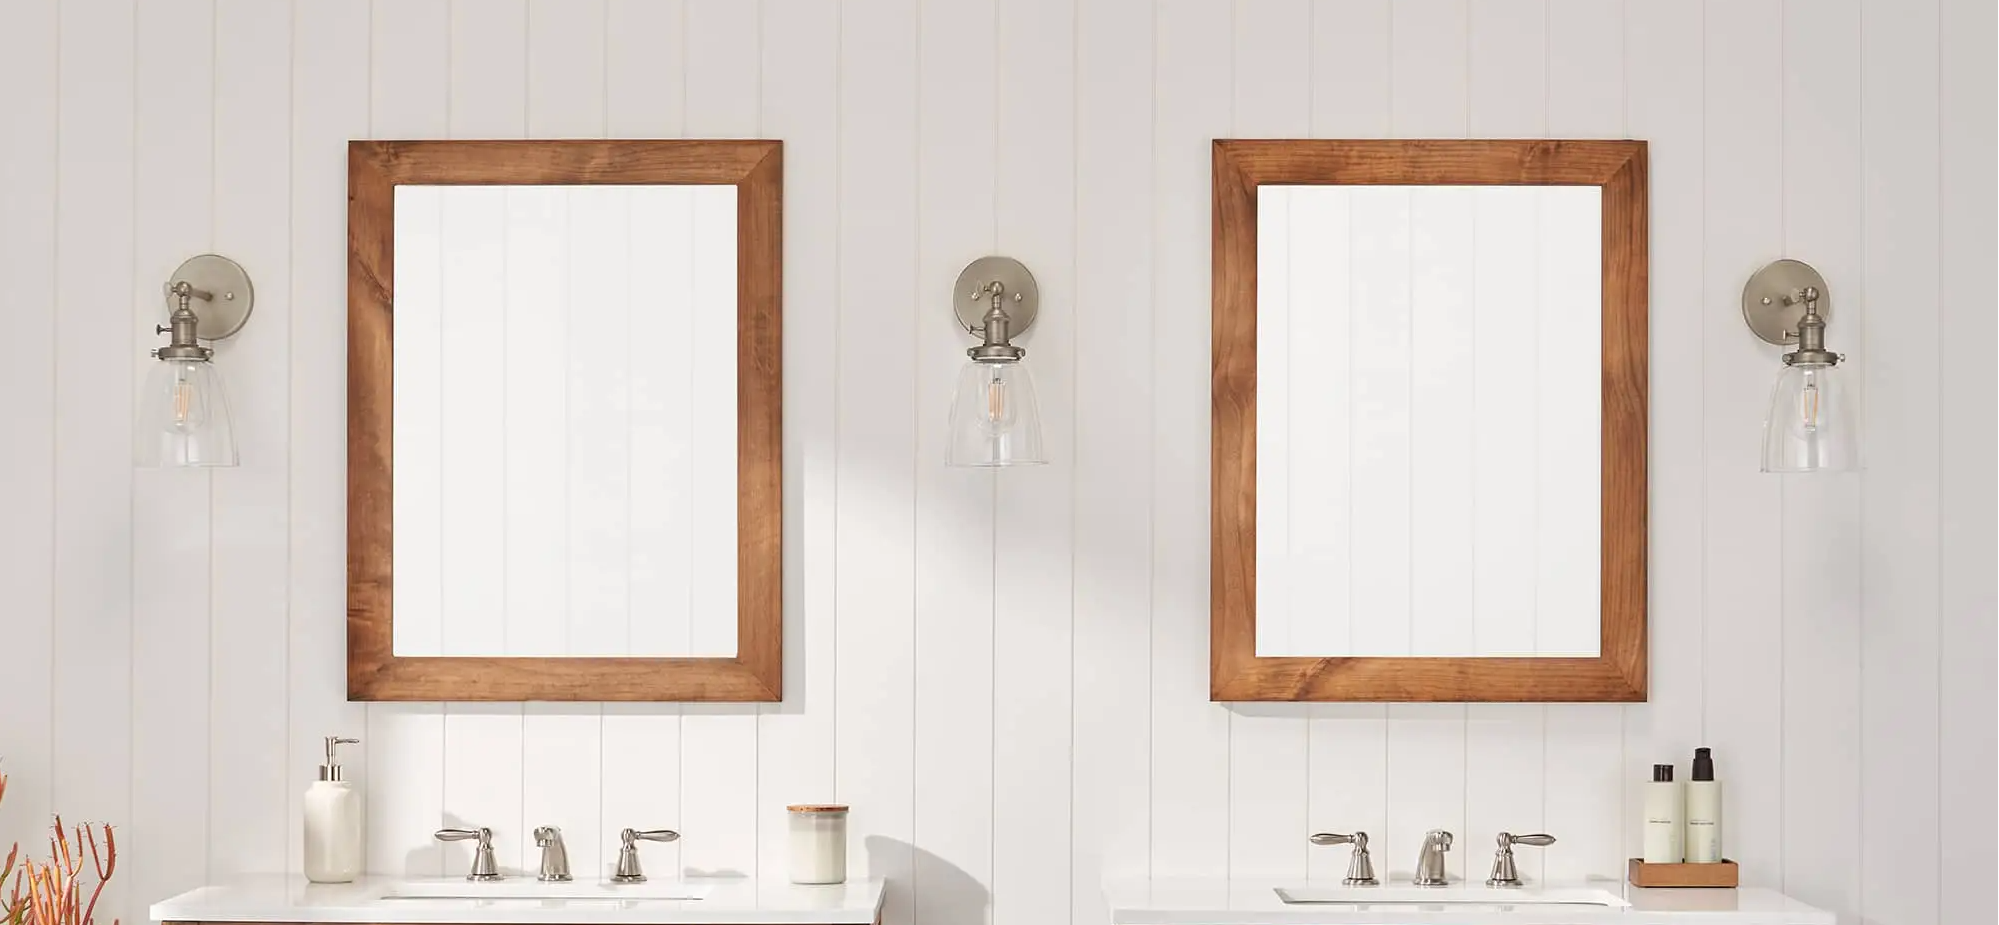 2 farmhouse style vanity mirror in a bathroom